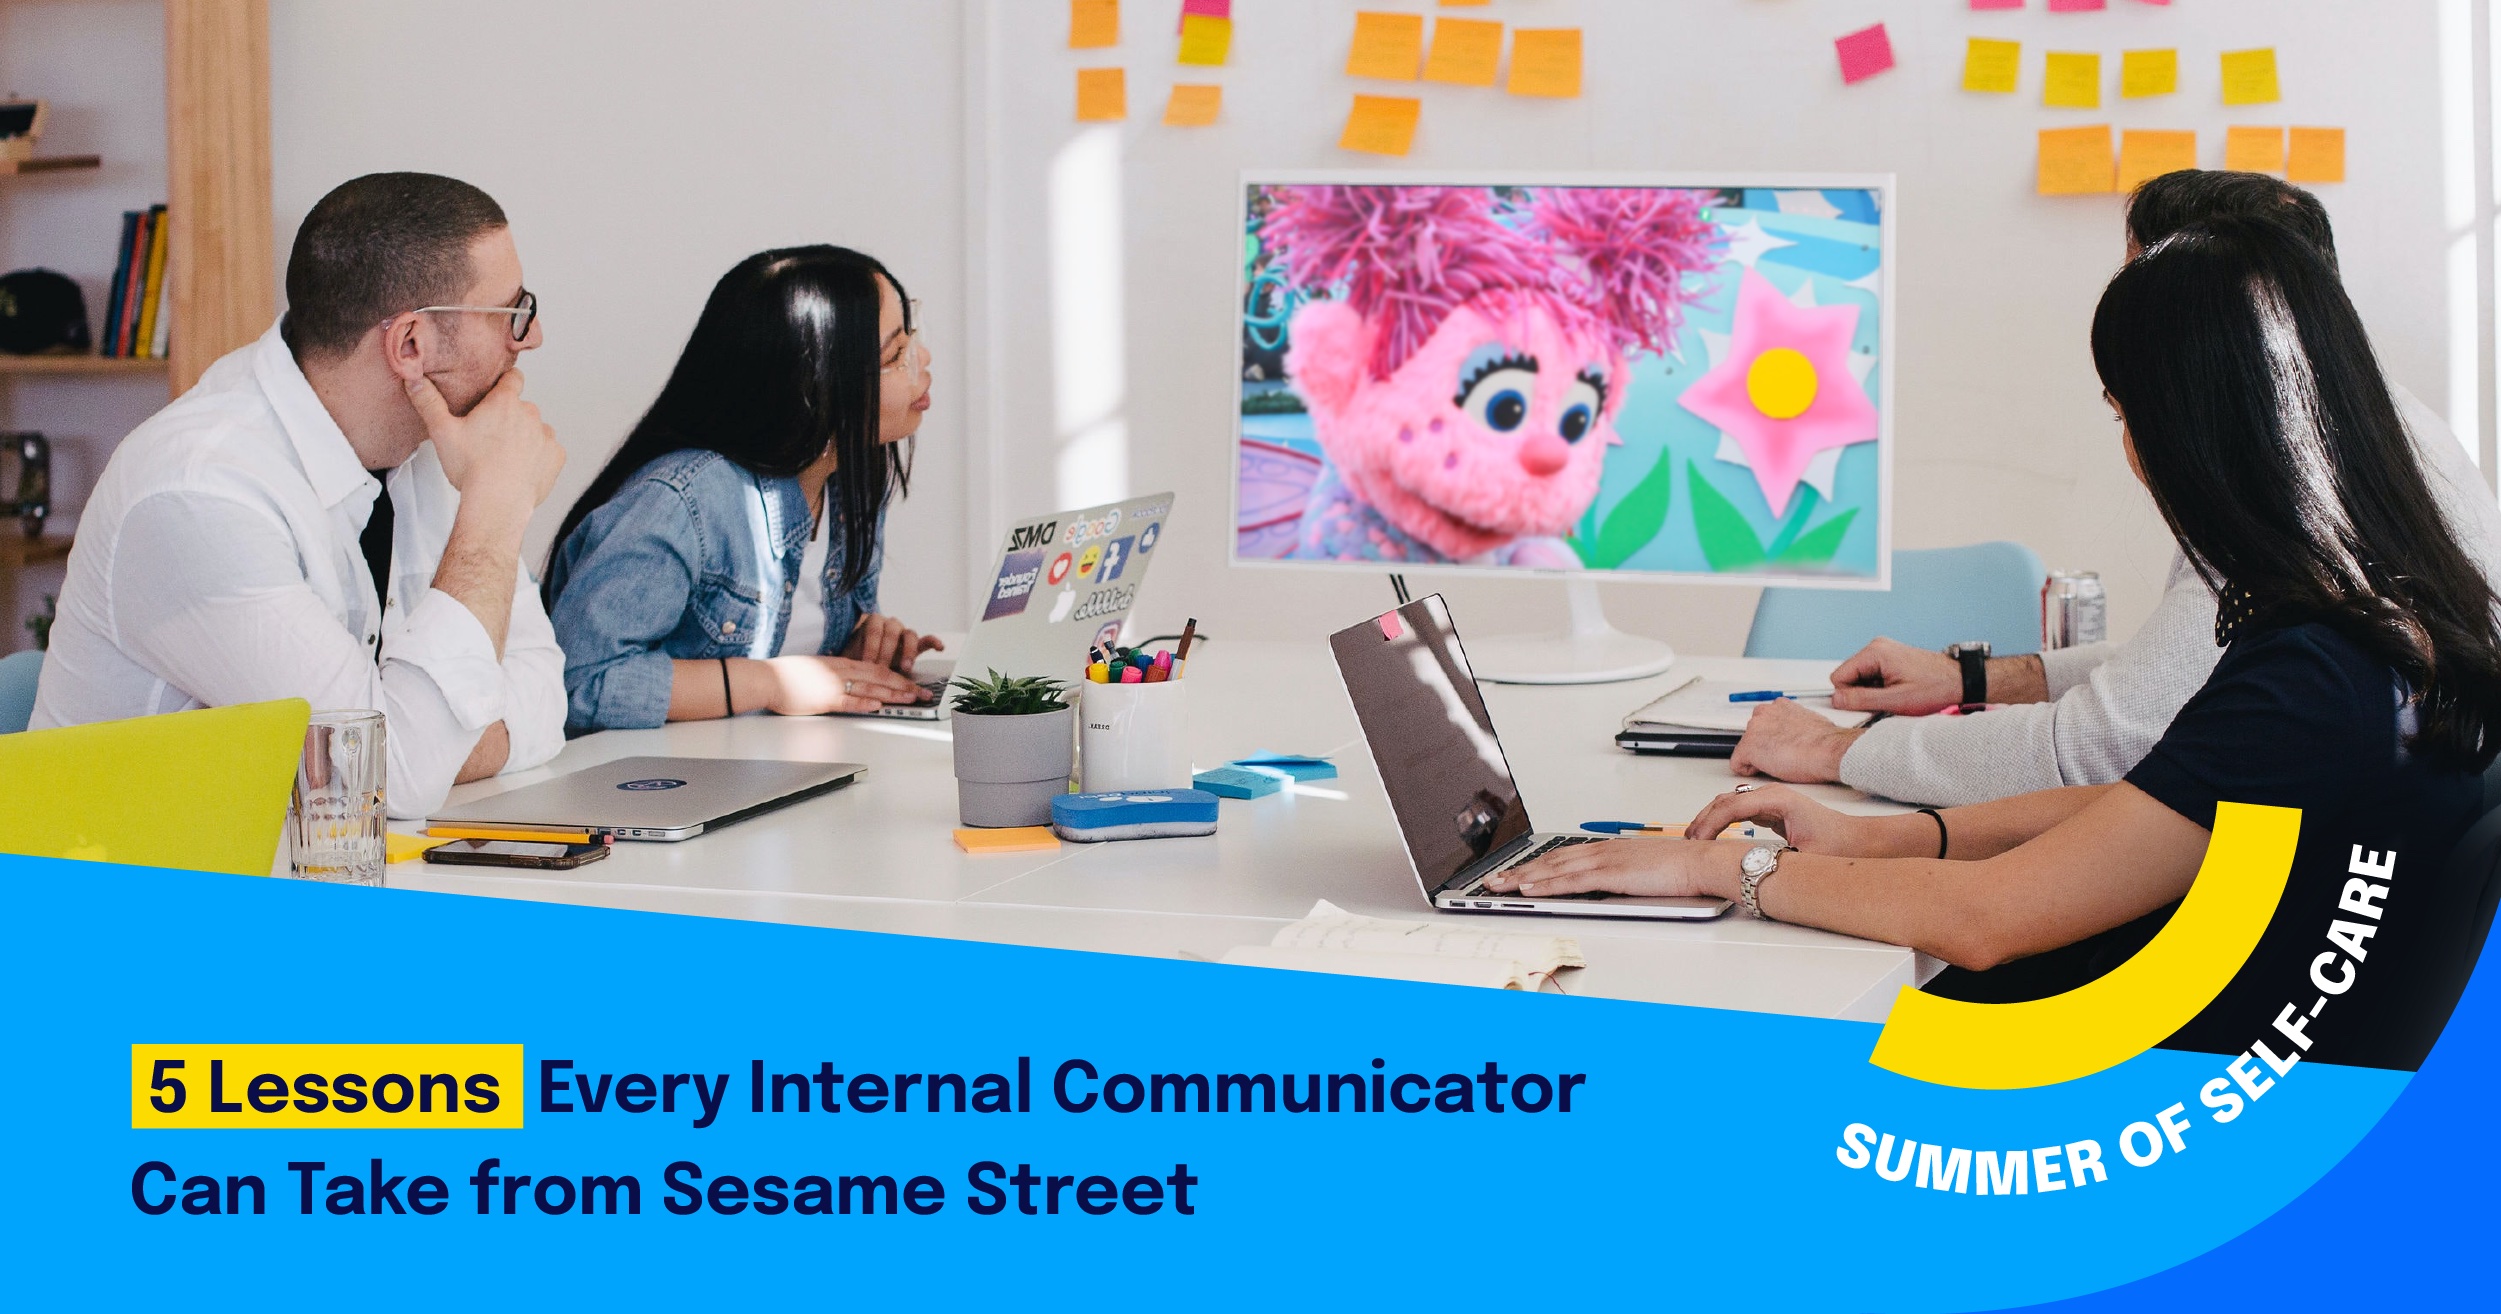 Sesame Street Sosc Social Featured